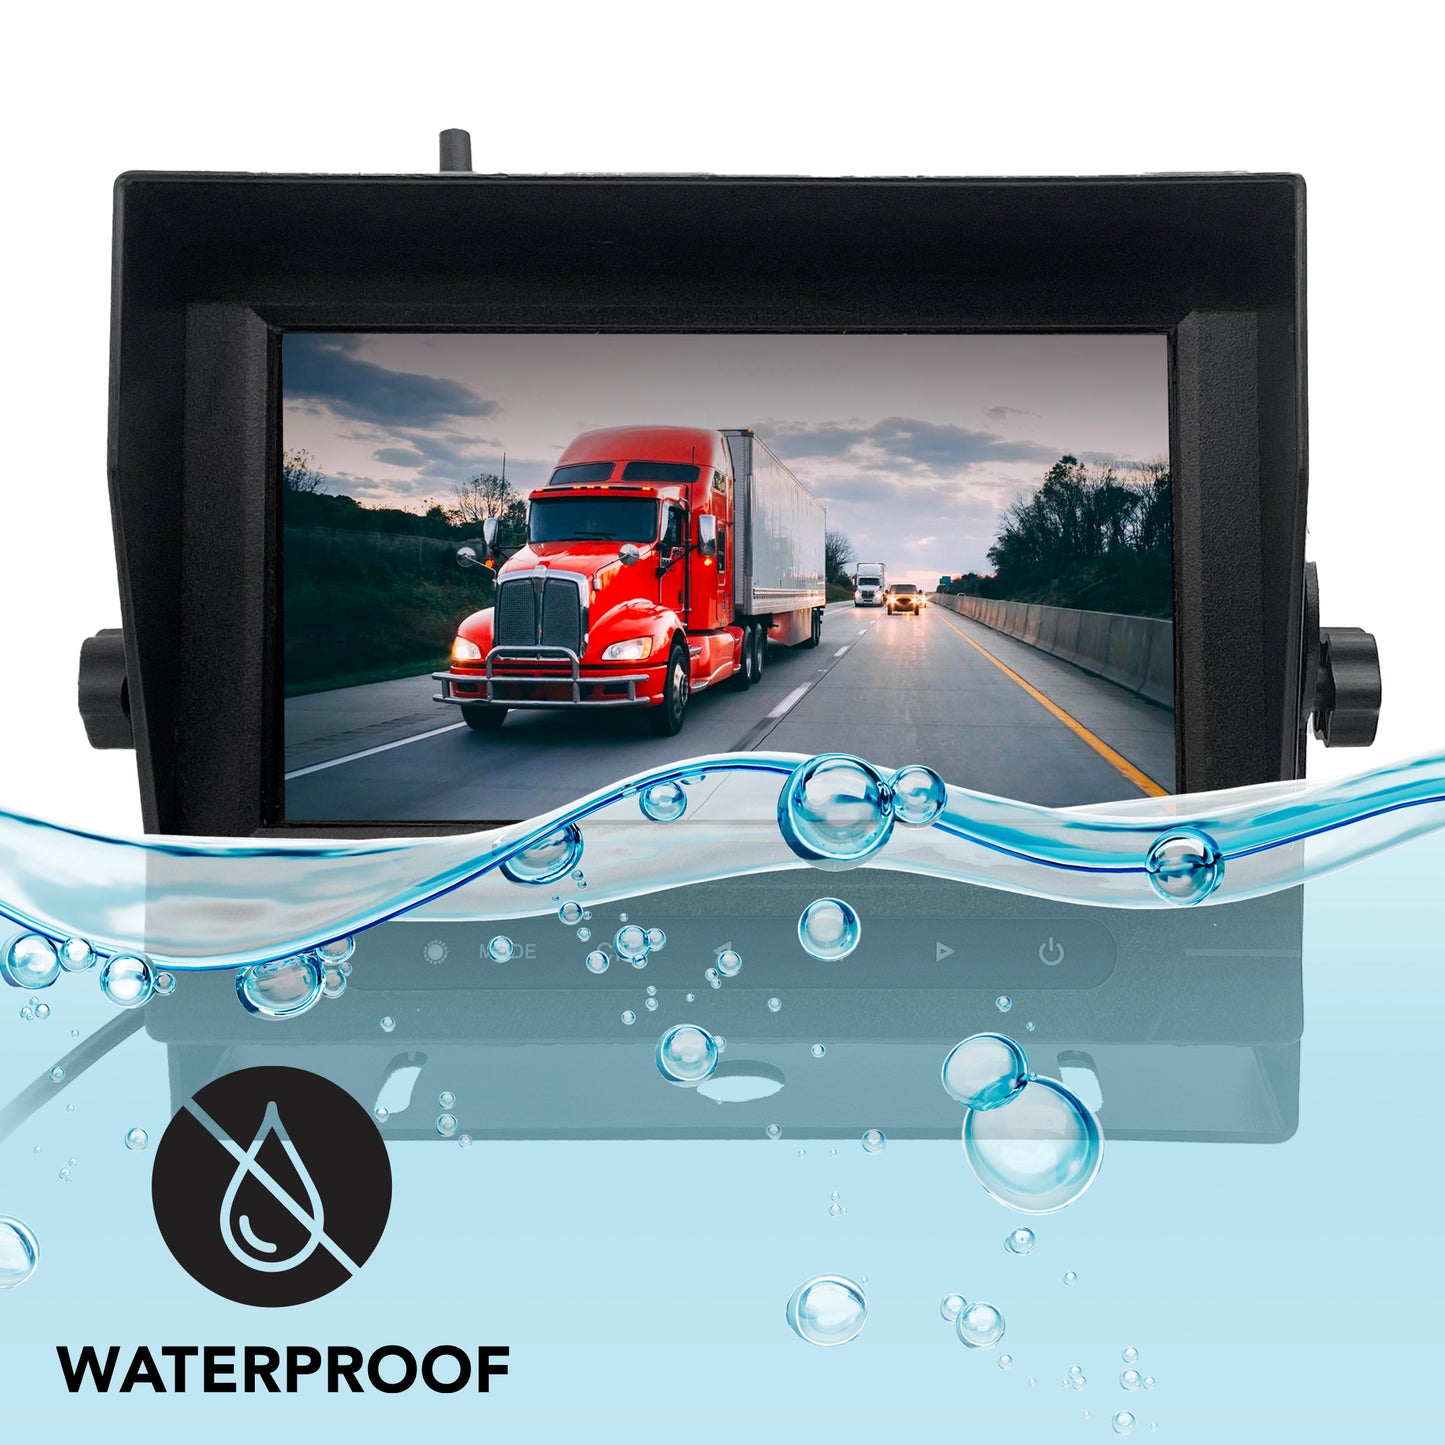 EagleEye Waterproof Wireless Backup Camera System With 7" LCD